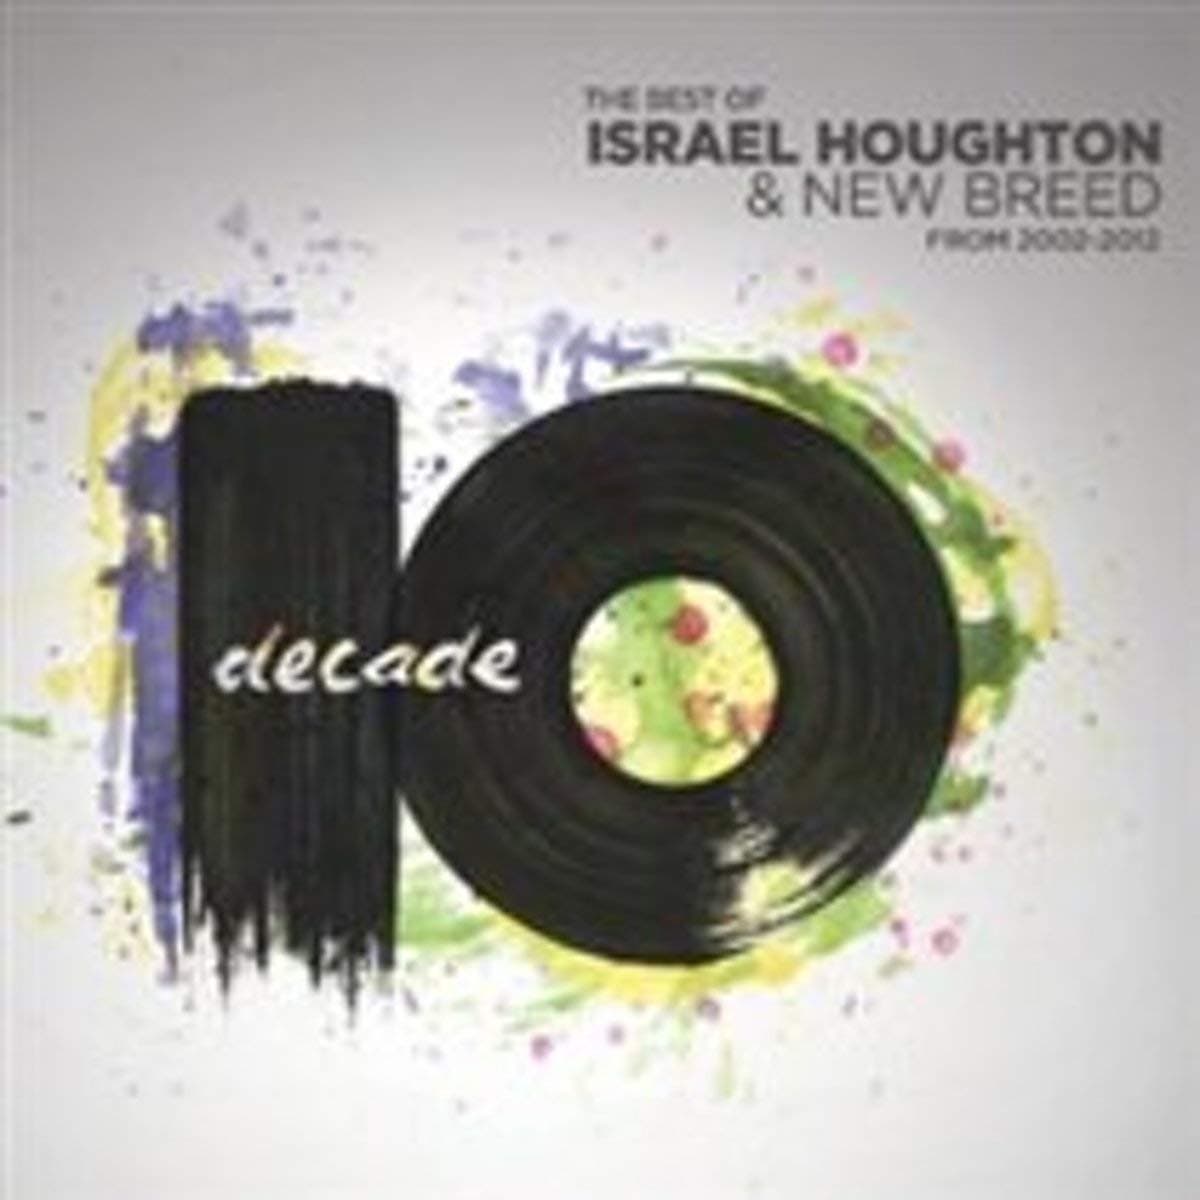 Decade [AudioCD] Israel Houghton & New Breed (2 CD Set), Christian Music CD, NIP